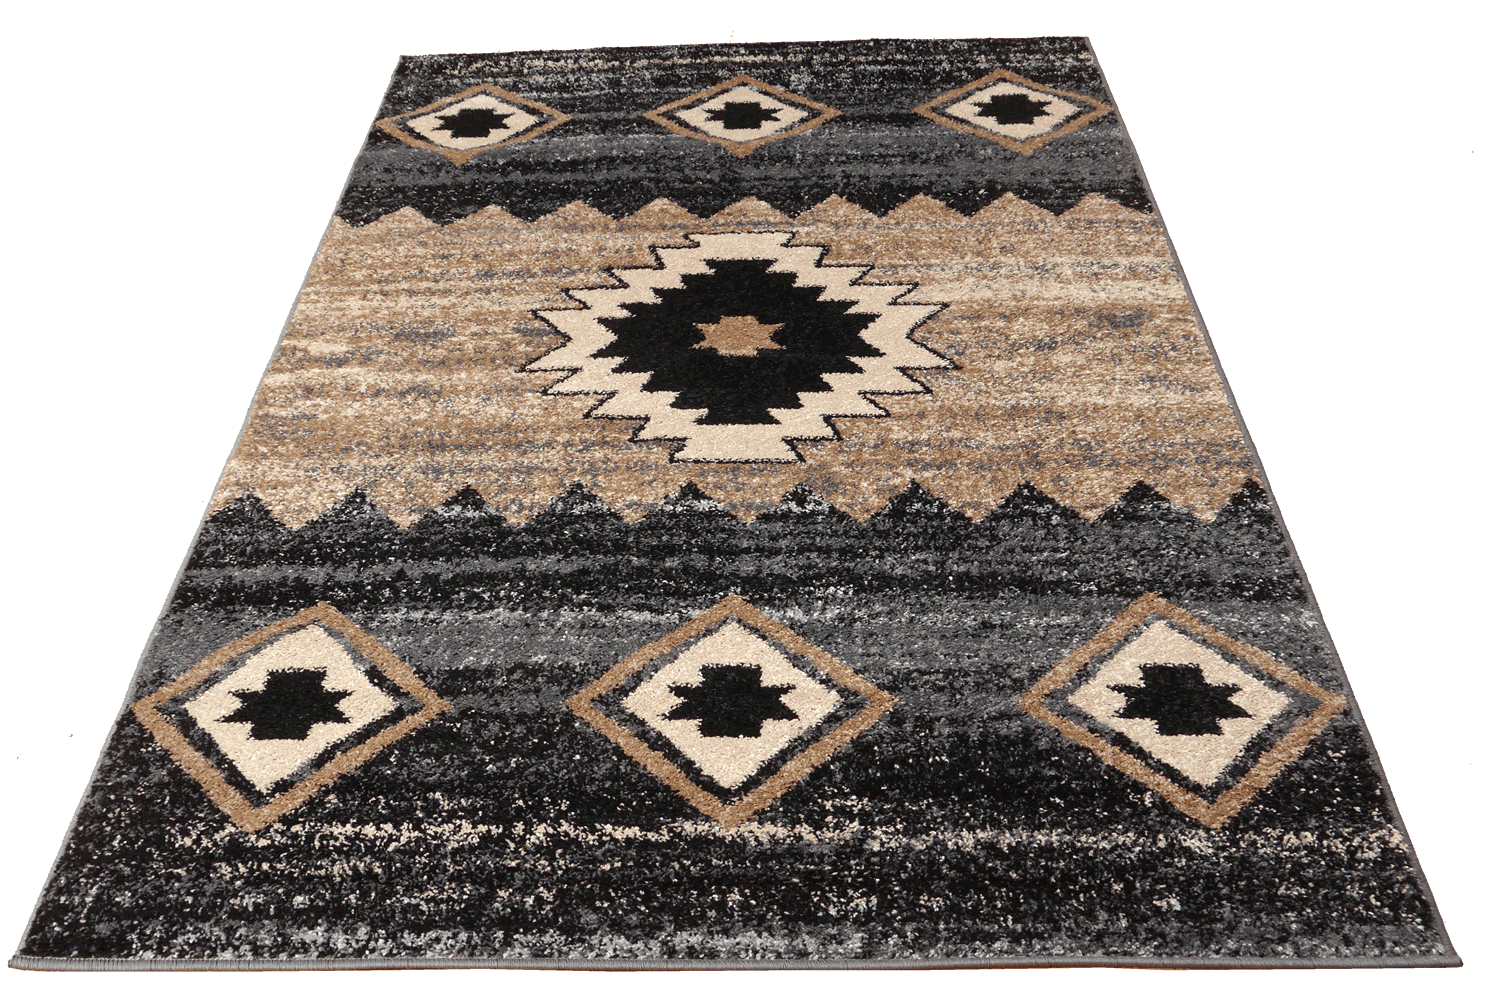 Download PNG image - Carpets PNG Image 